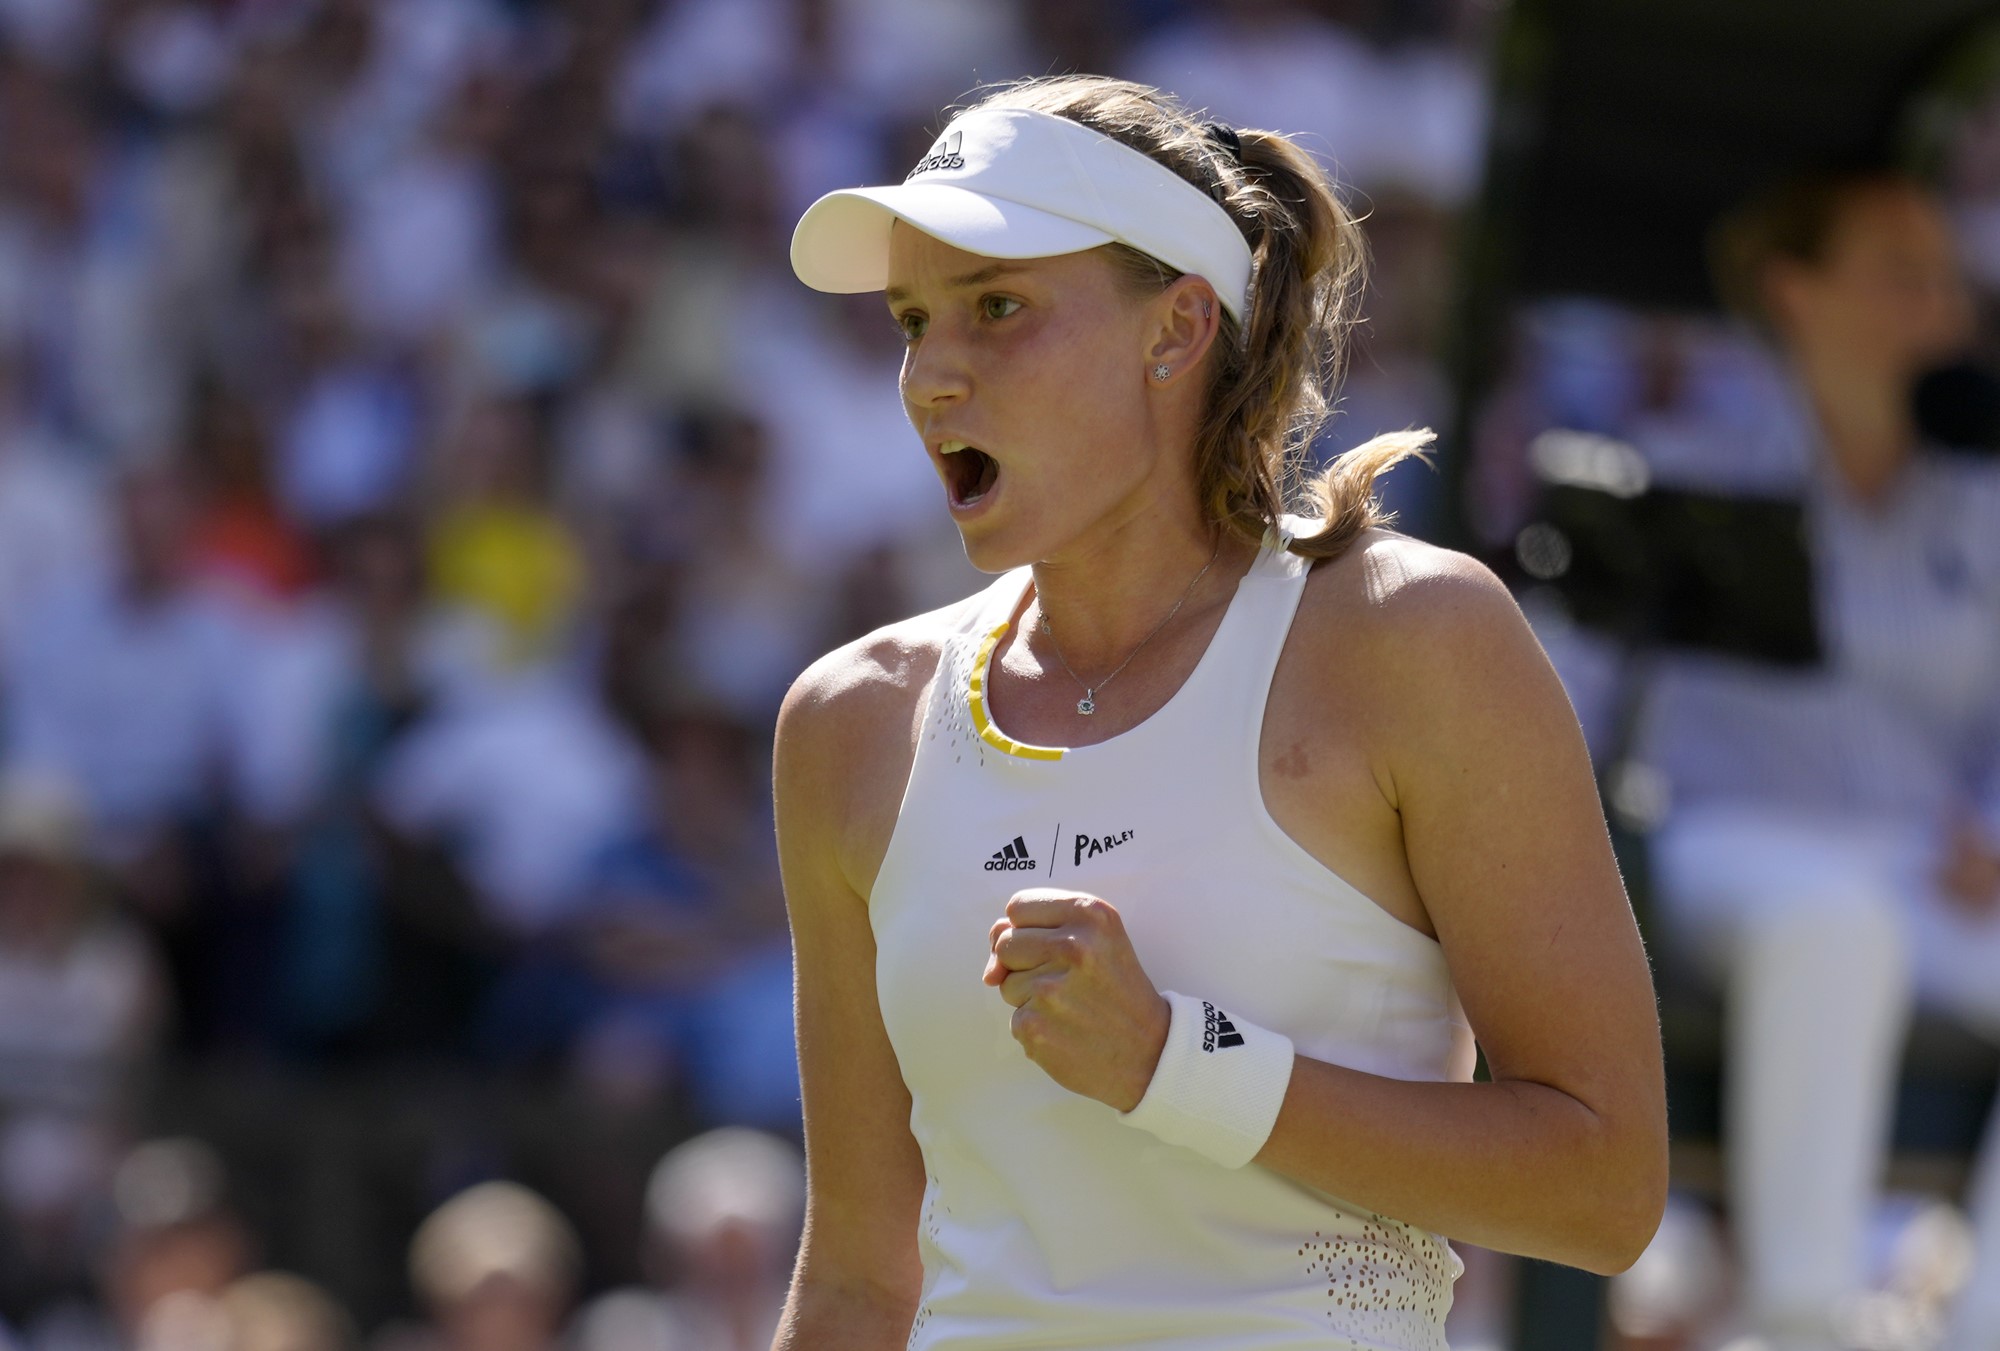 Elena Rybakina shouts after winning a point during the Wimbledon final.